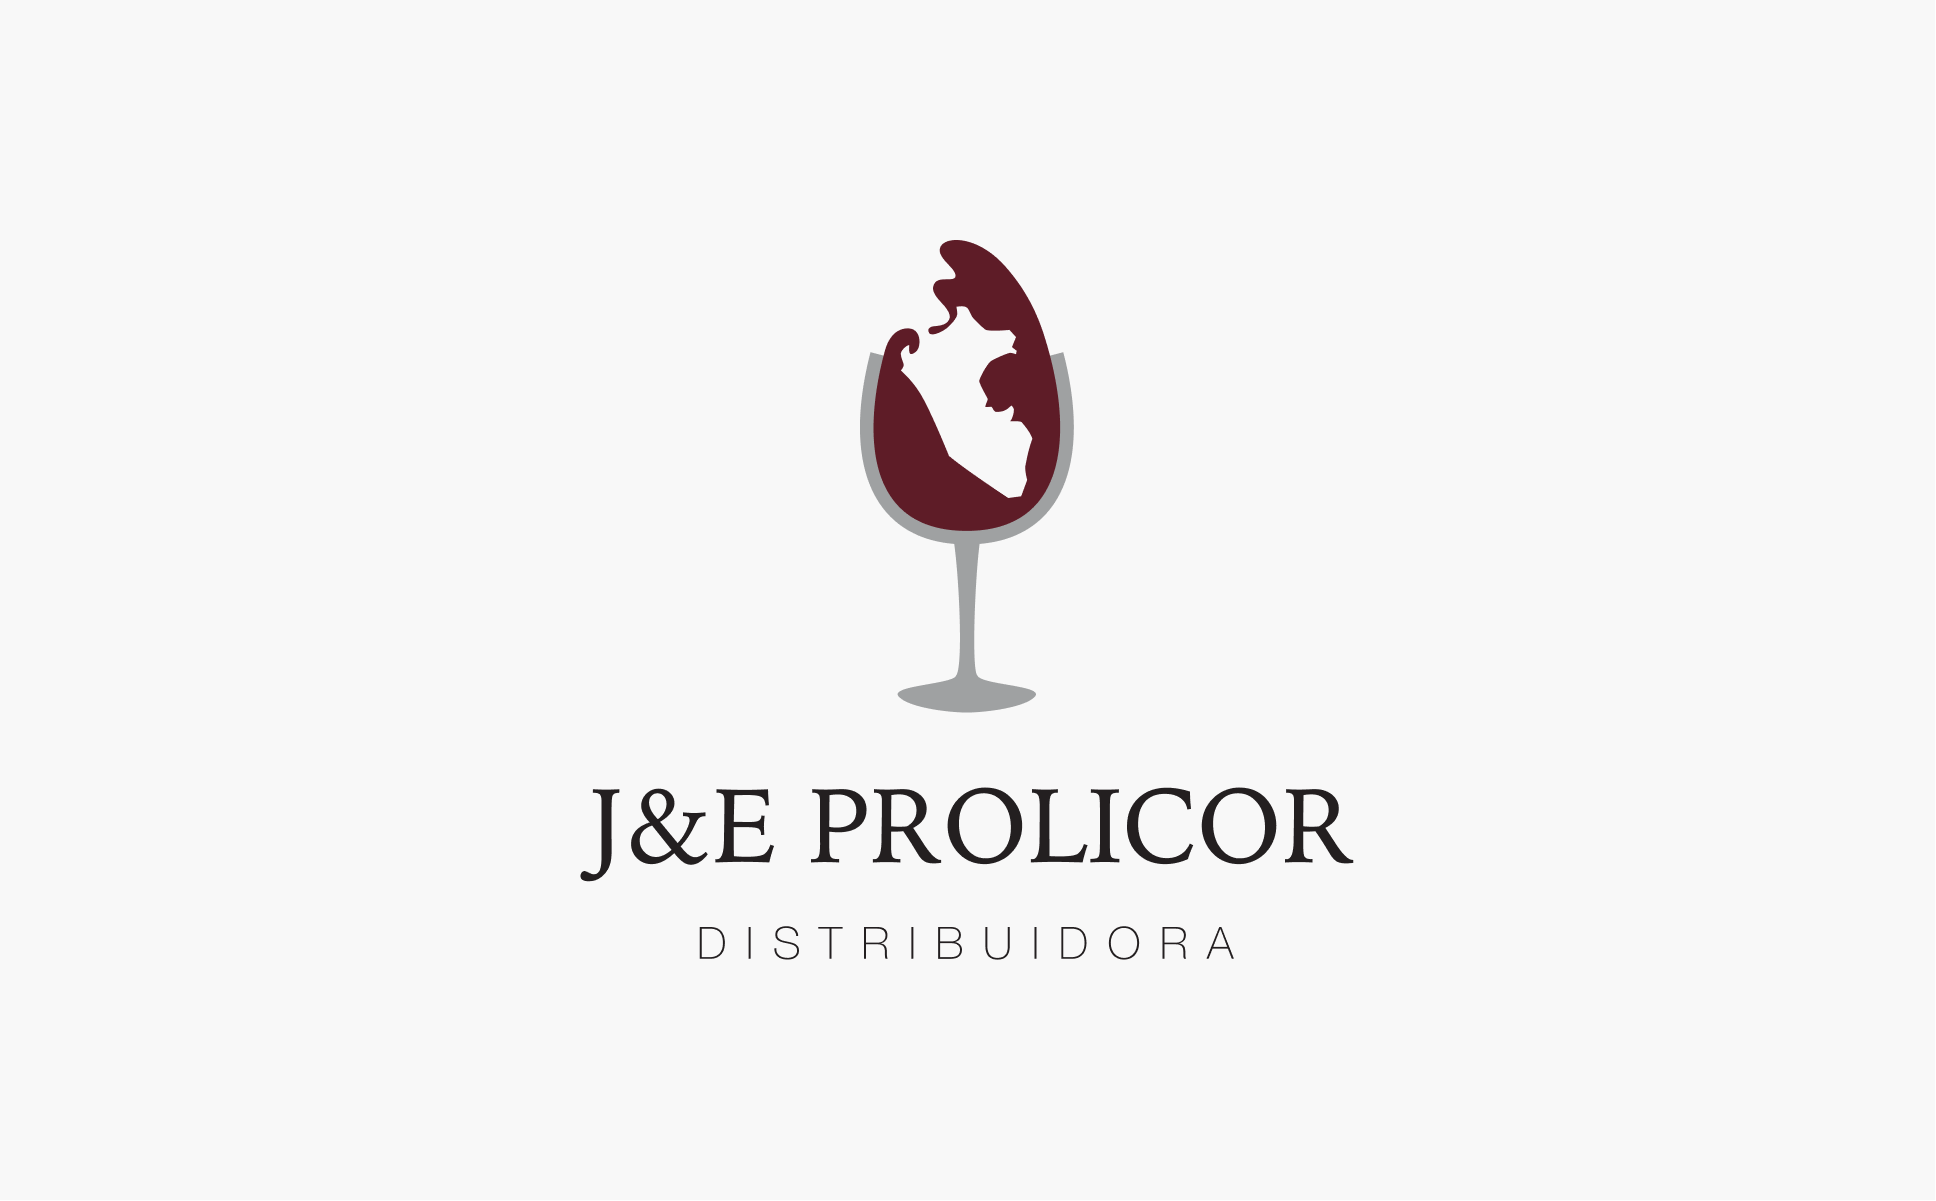 Prolicor's logo.